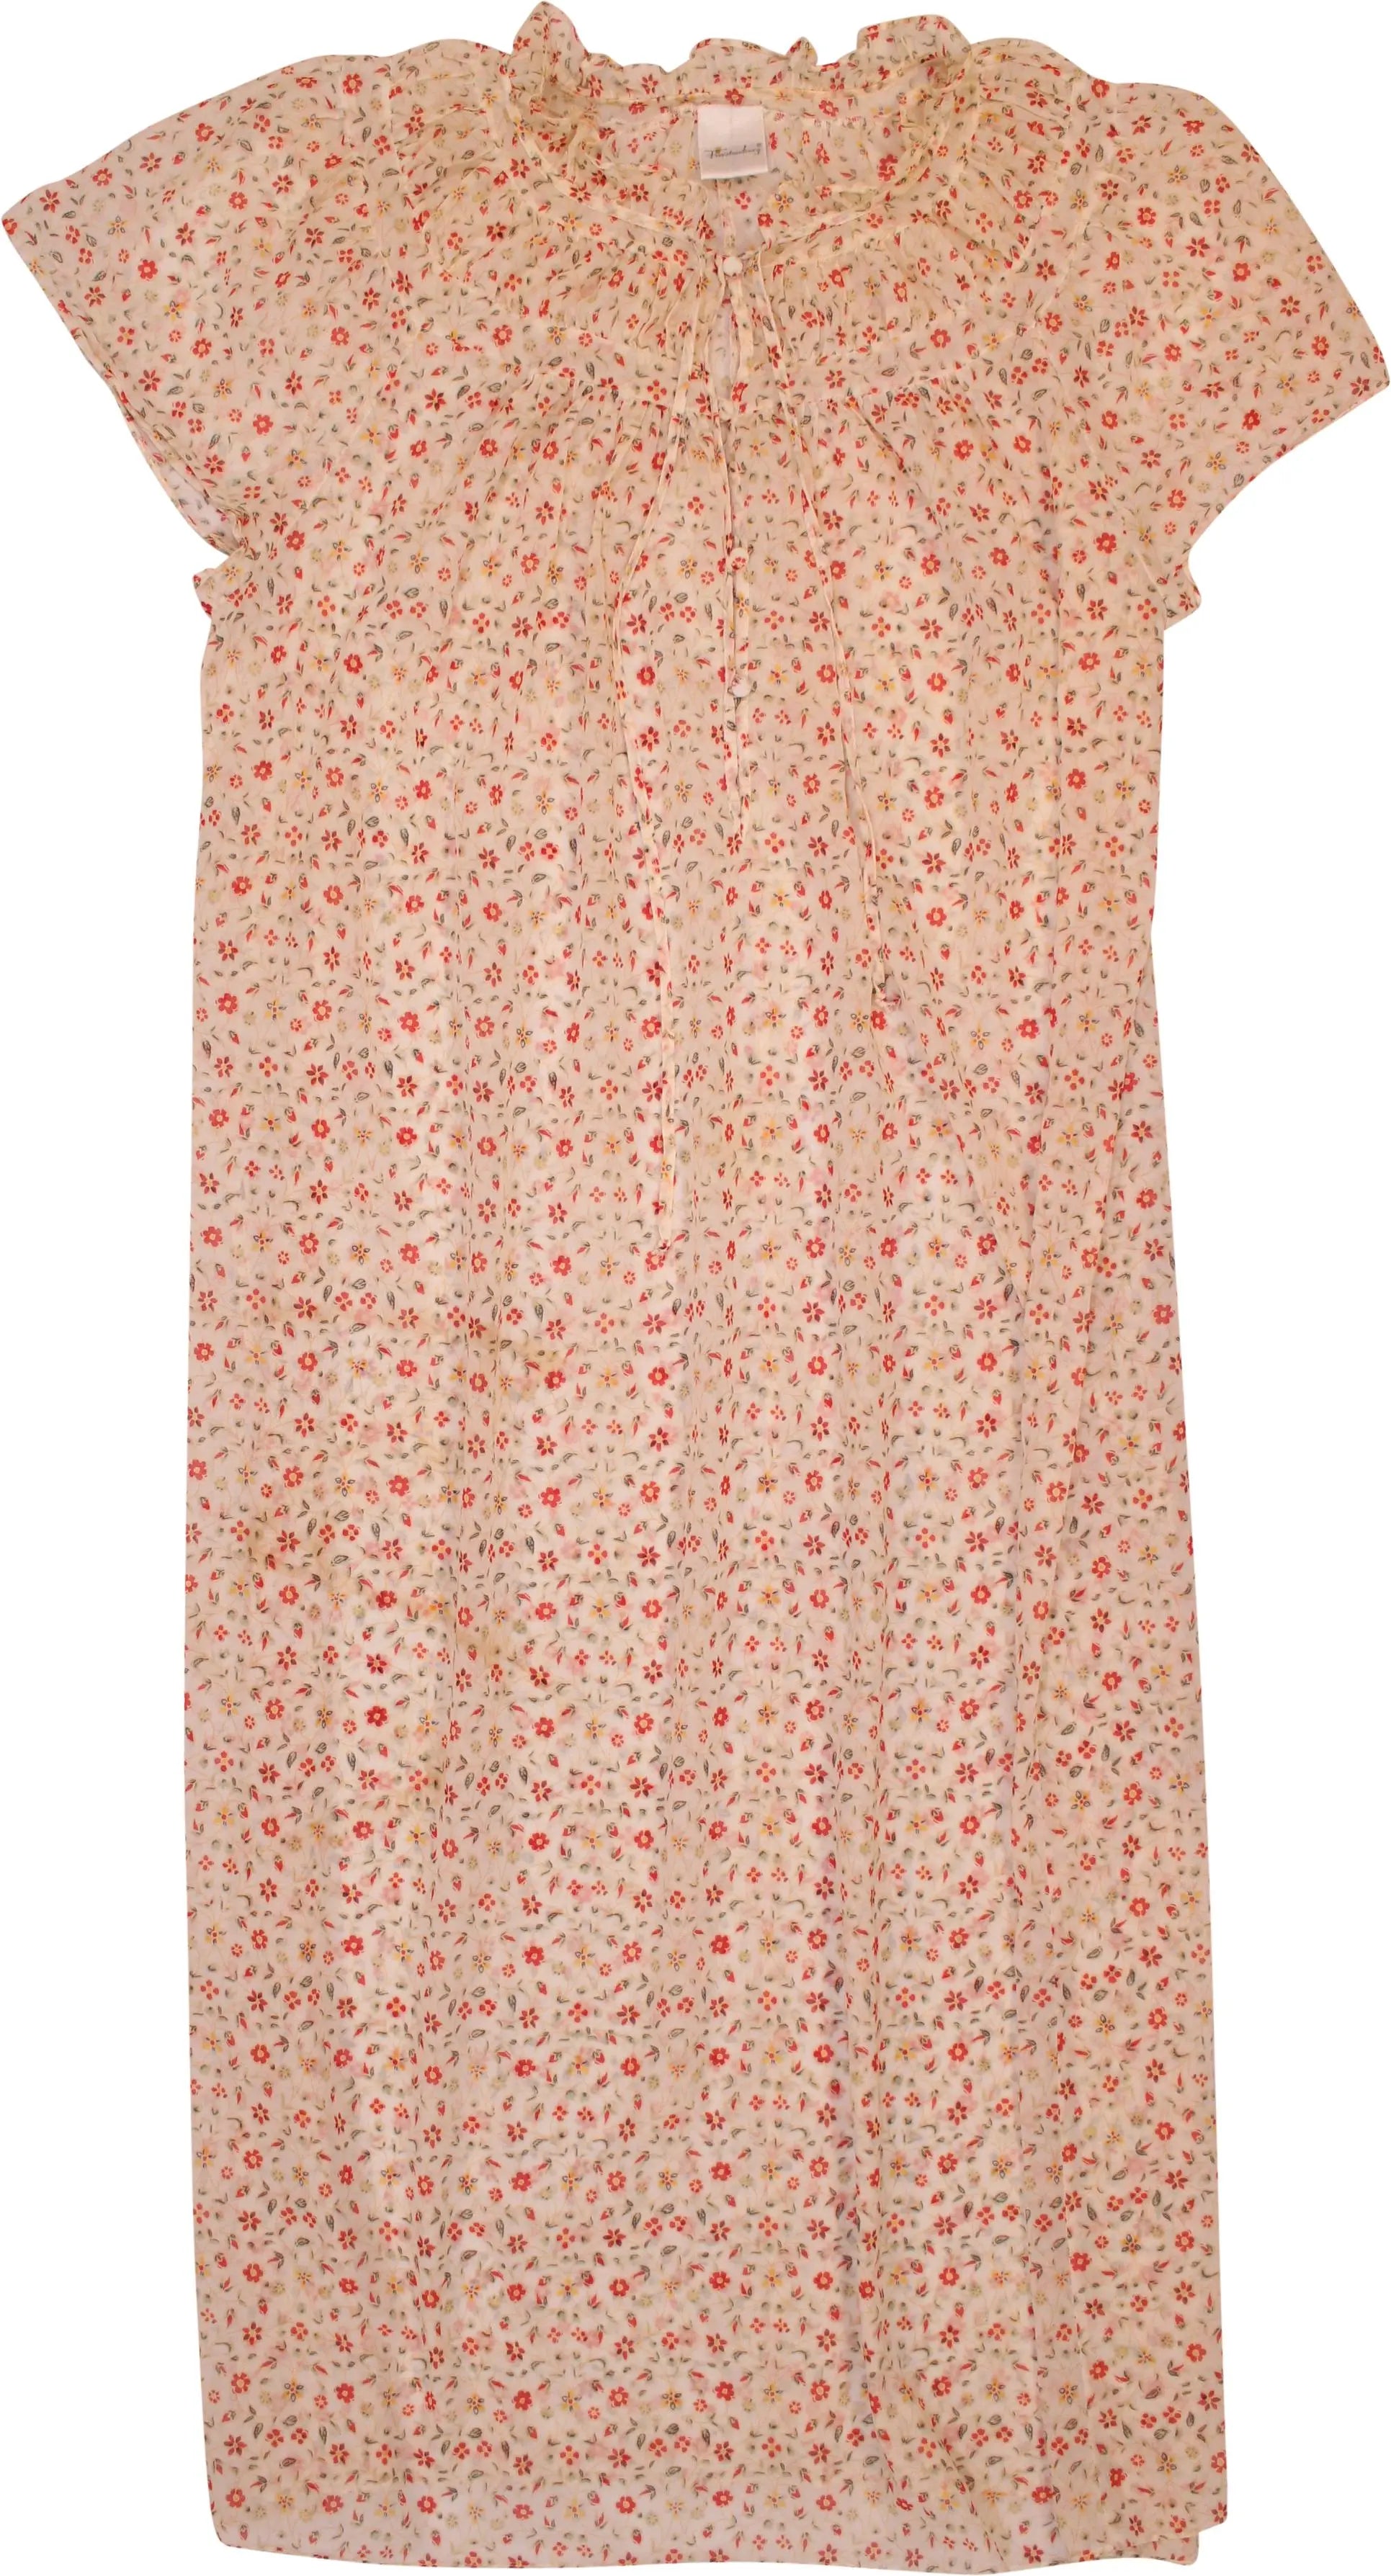 Fürstenberg - Seethrough Dress- ThriftTale.com - Vintage and second handclothing